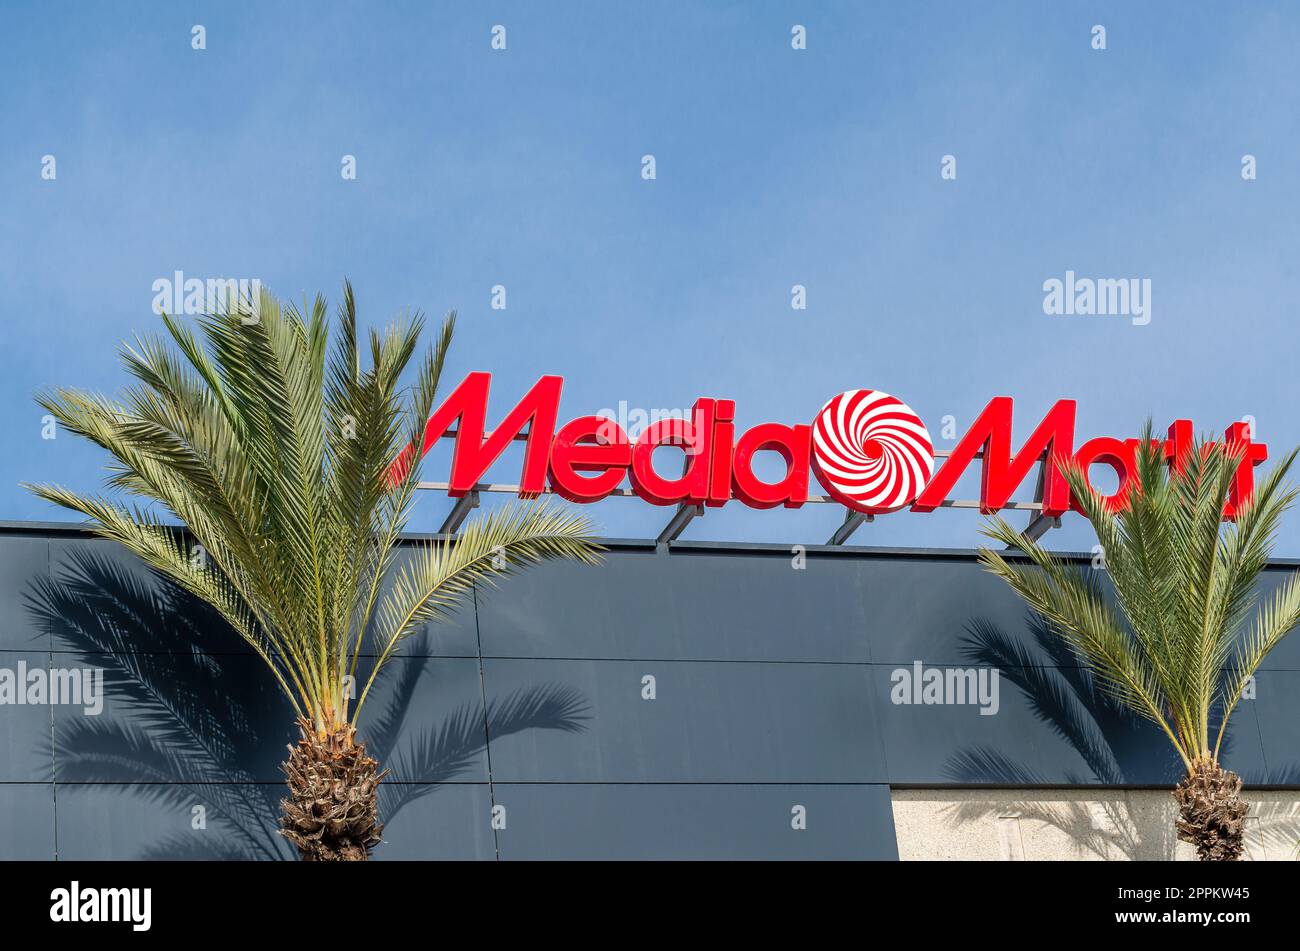 MARBELLA, SPAIN - OCTOBER 11, 2021: Facade of a Media Markt store in Marbella, Spain. Media Markt is a chain of stores selling consumer electronics Stock Photo